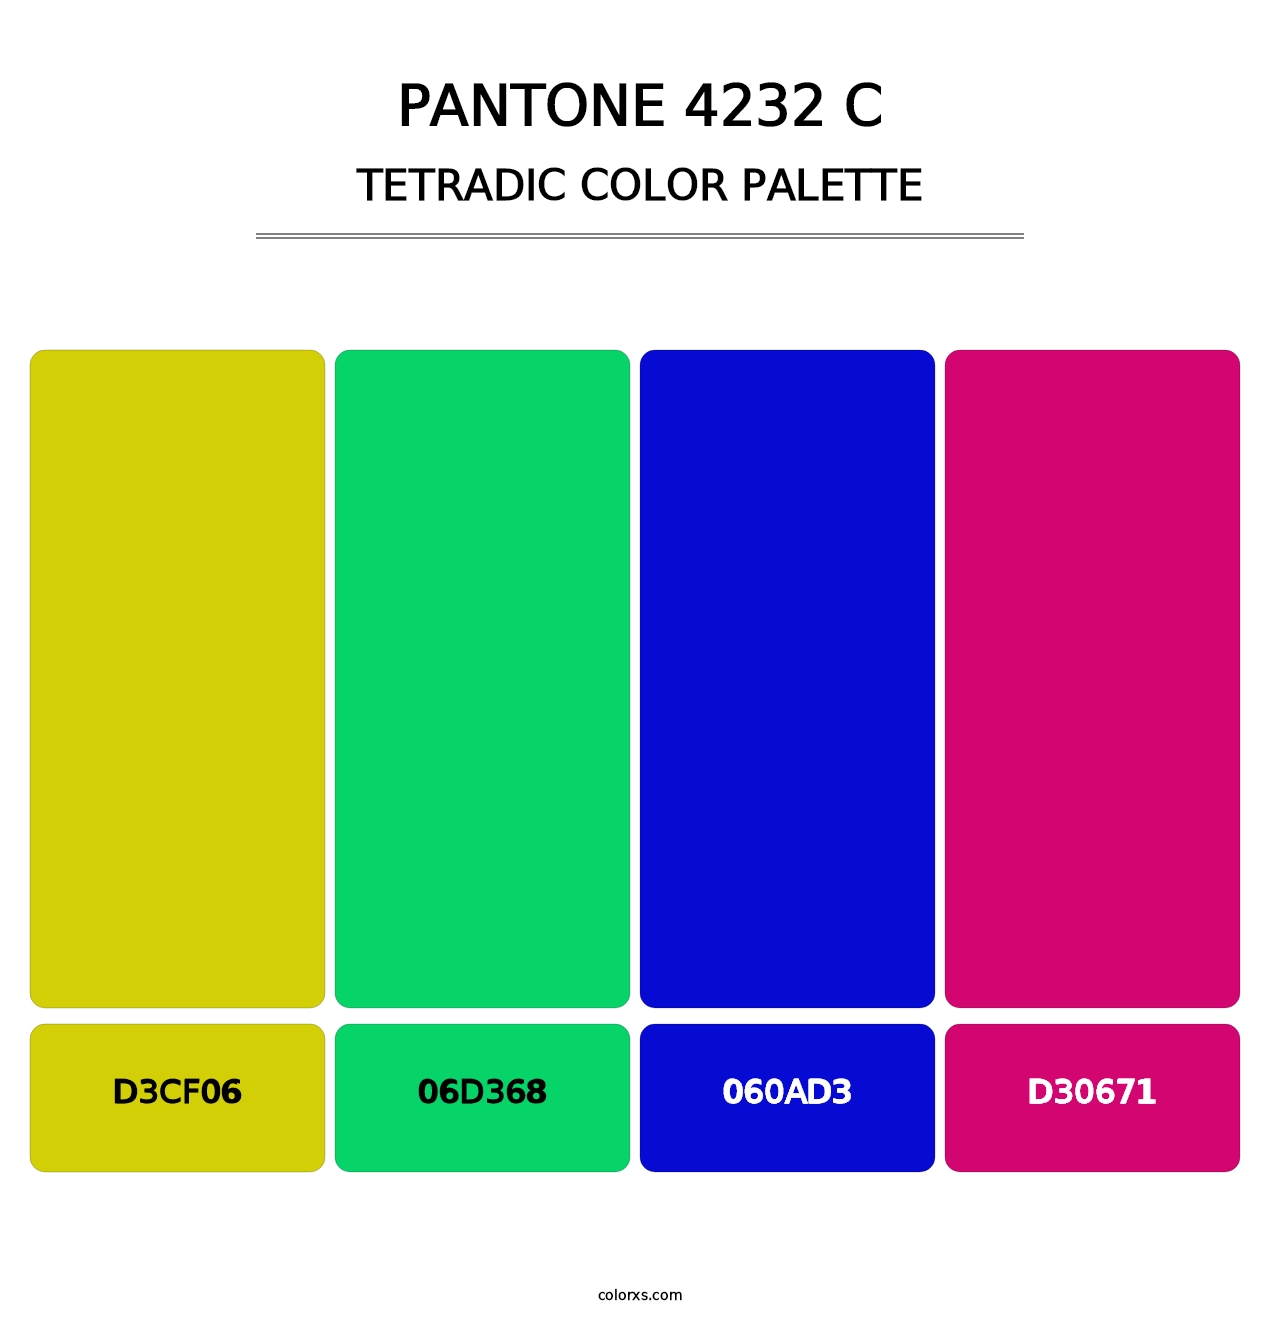 PANTONE 4232 C - Tetradic Color Palette